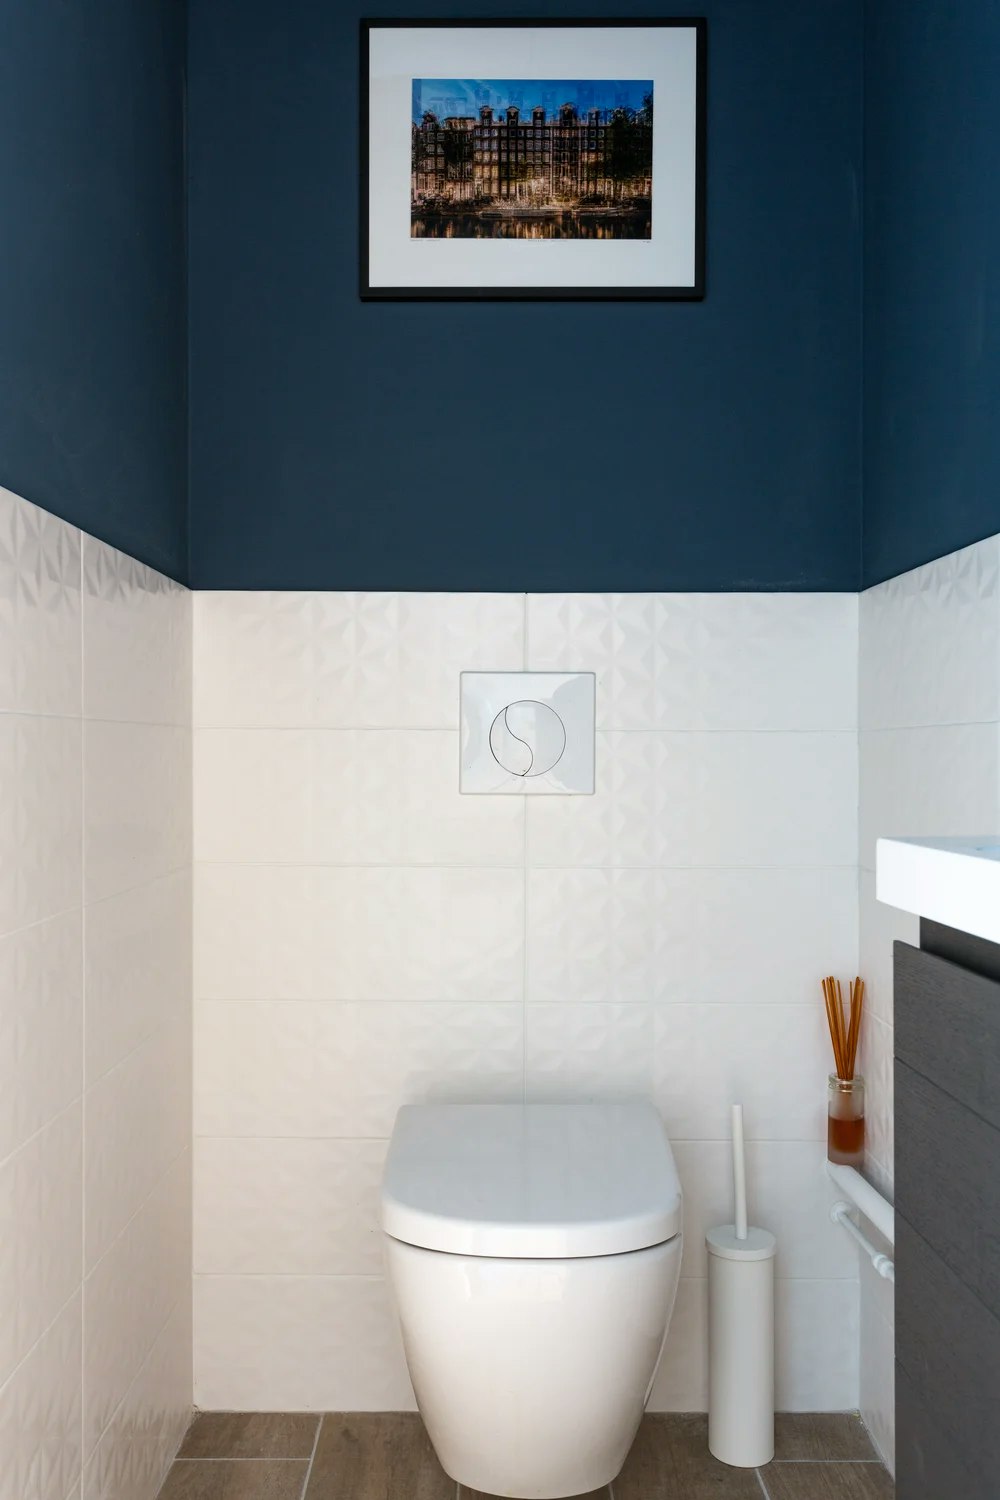 salles de bains mur bicolore bleu canard et faïence blanche